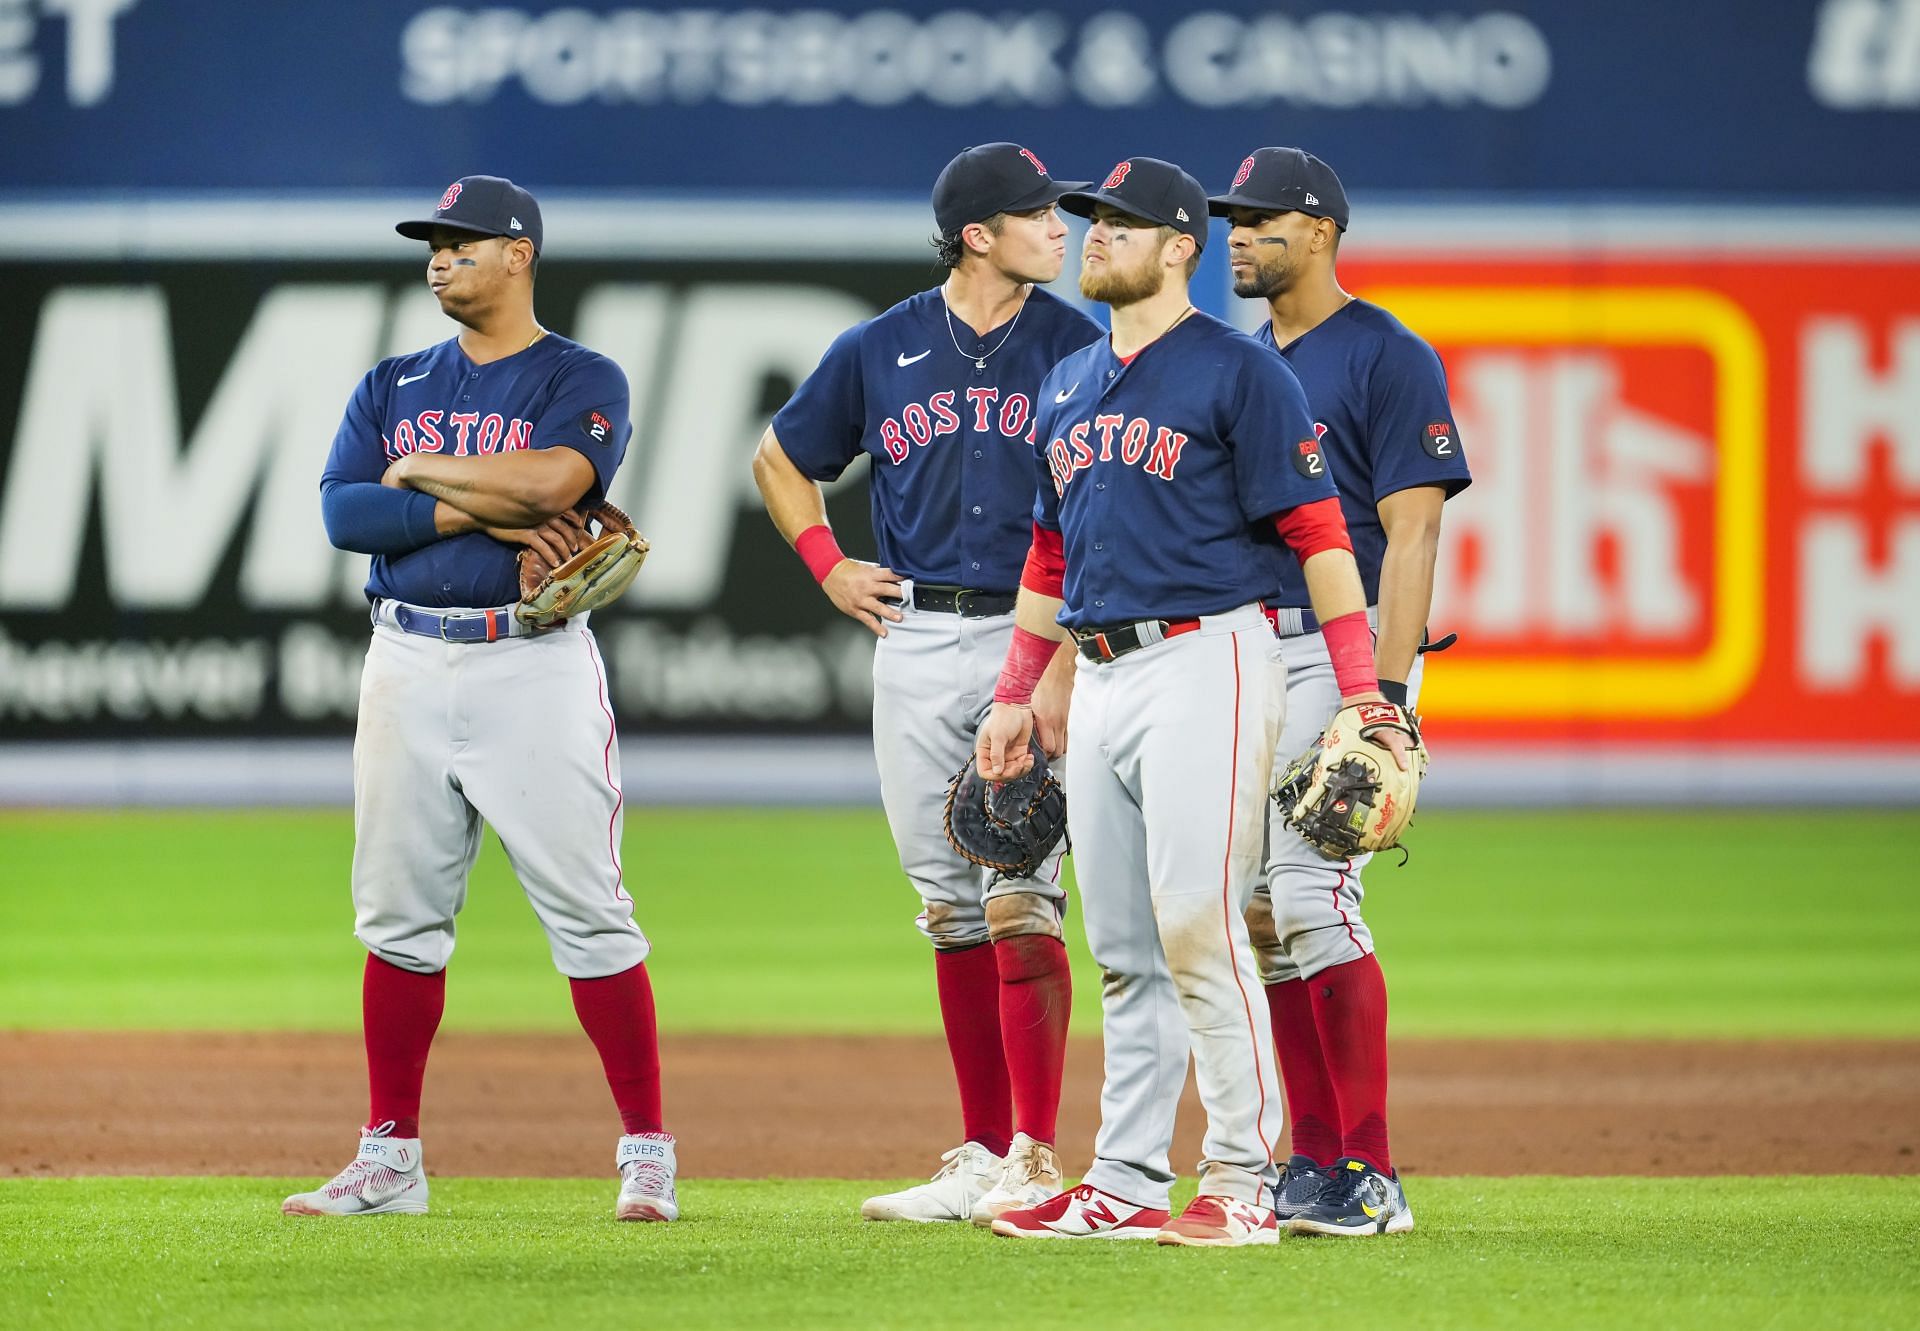 The Boston Red Sox have begun the season 7-10